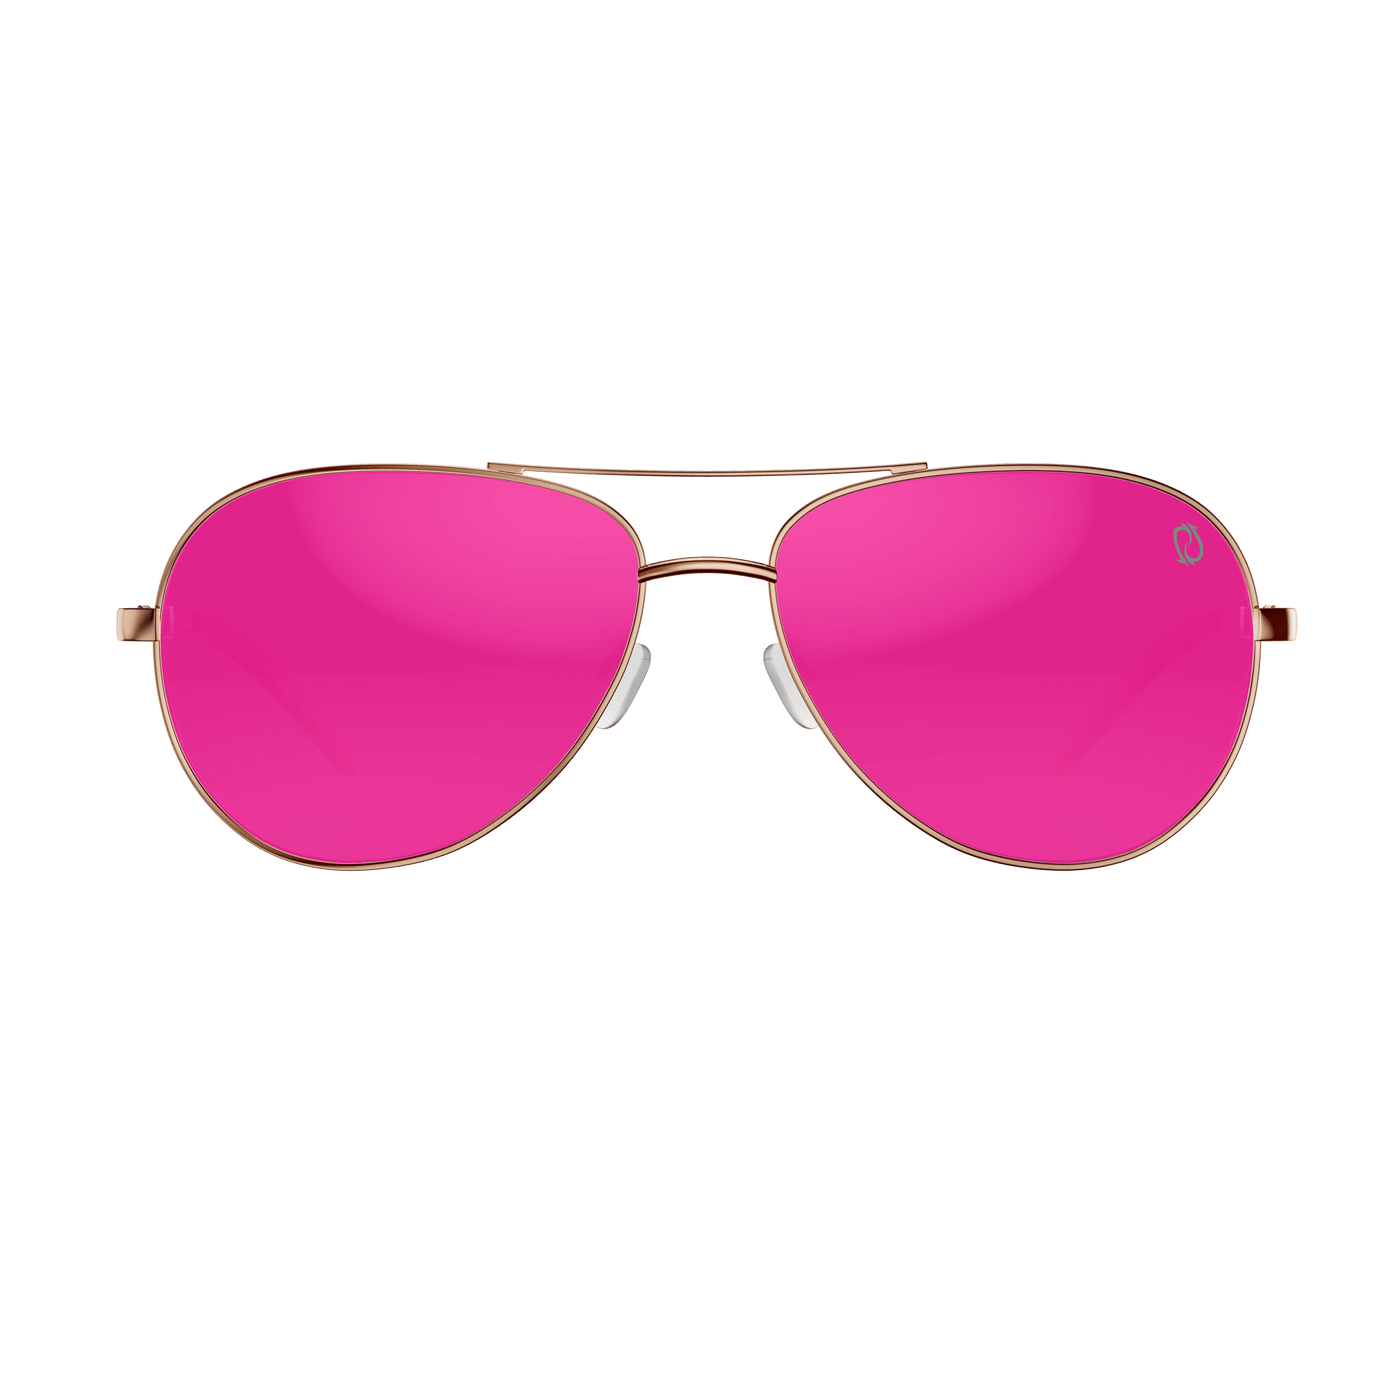 Redtail Republic Sunglasses Accessories Redtail Republic Sandbar Gold Pink Mirror